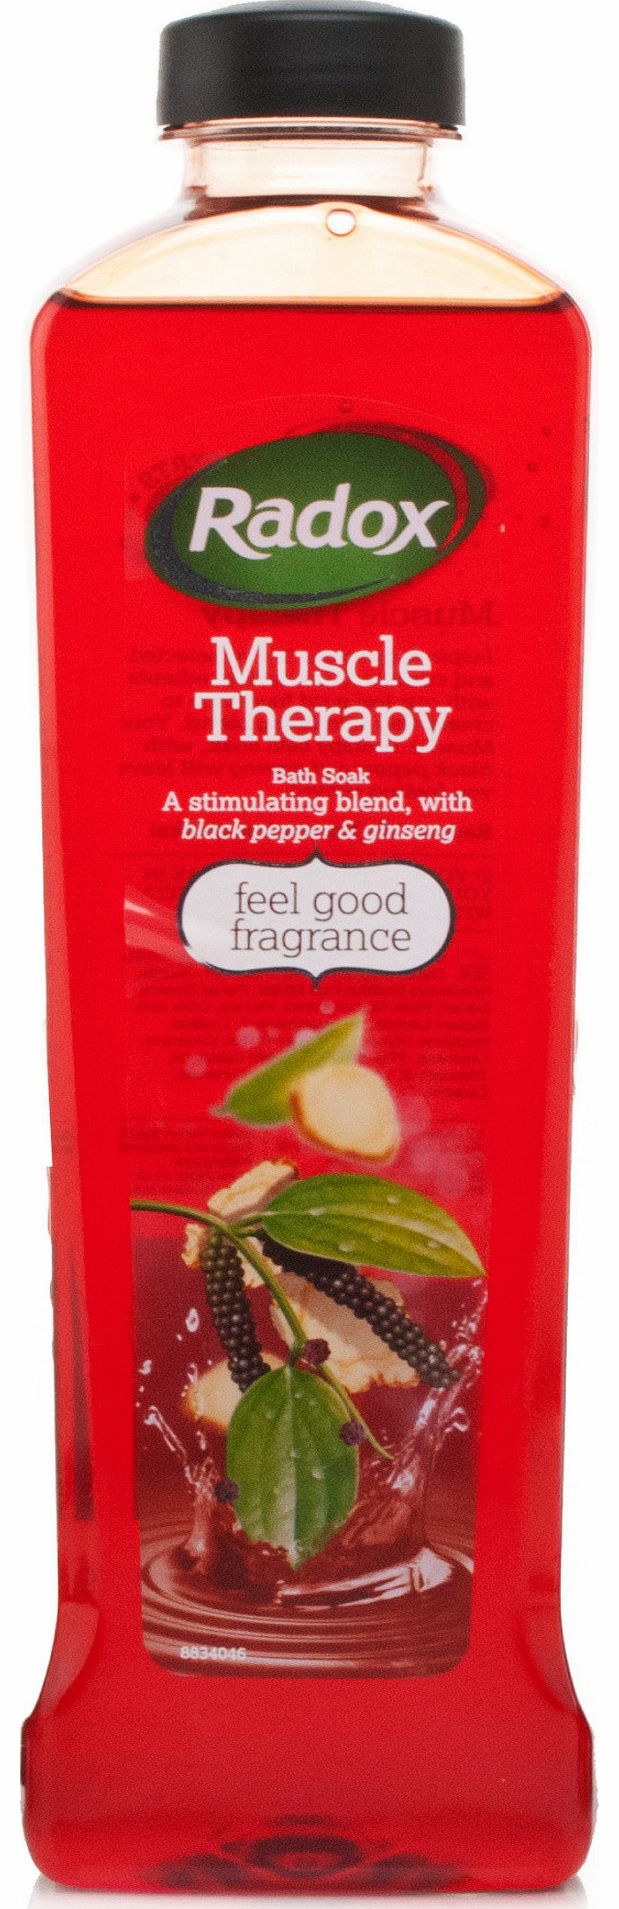 Muscle Therapy Bath Soak